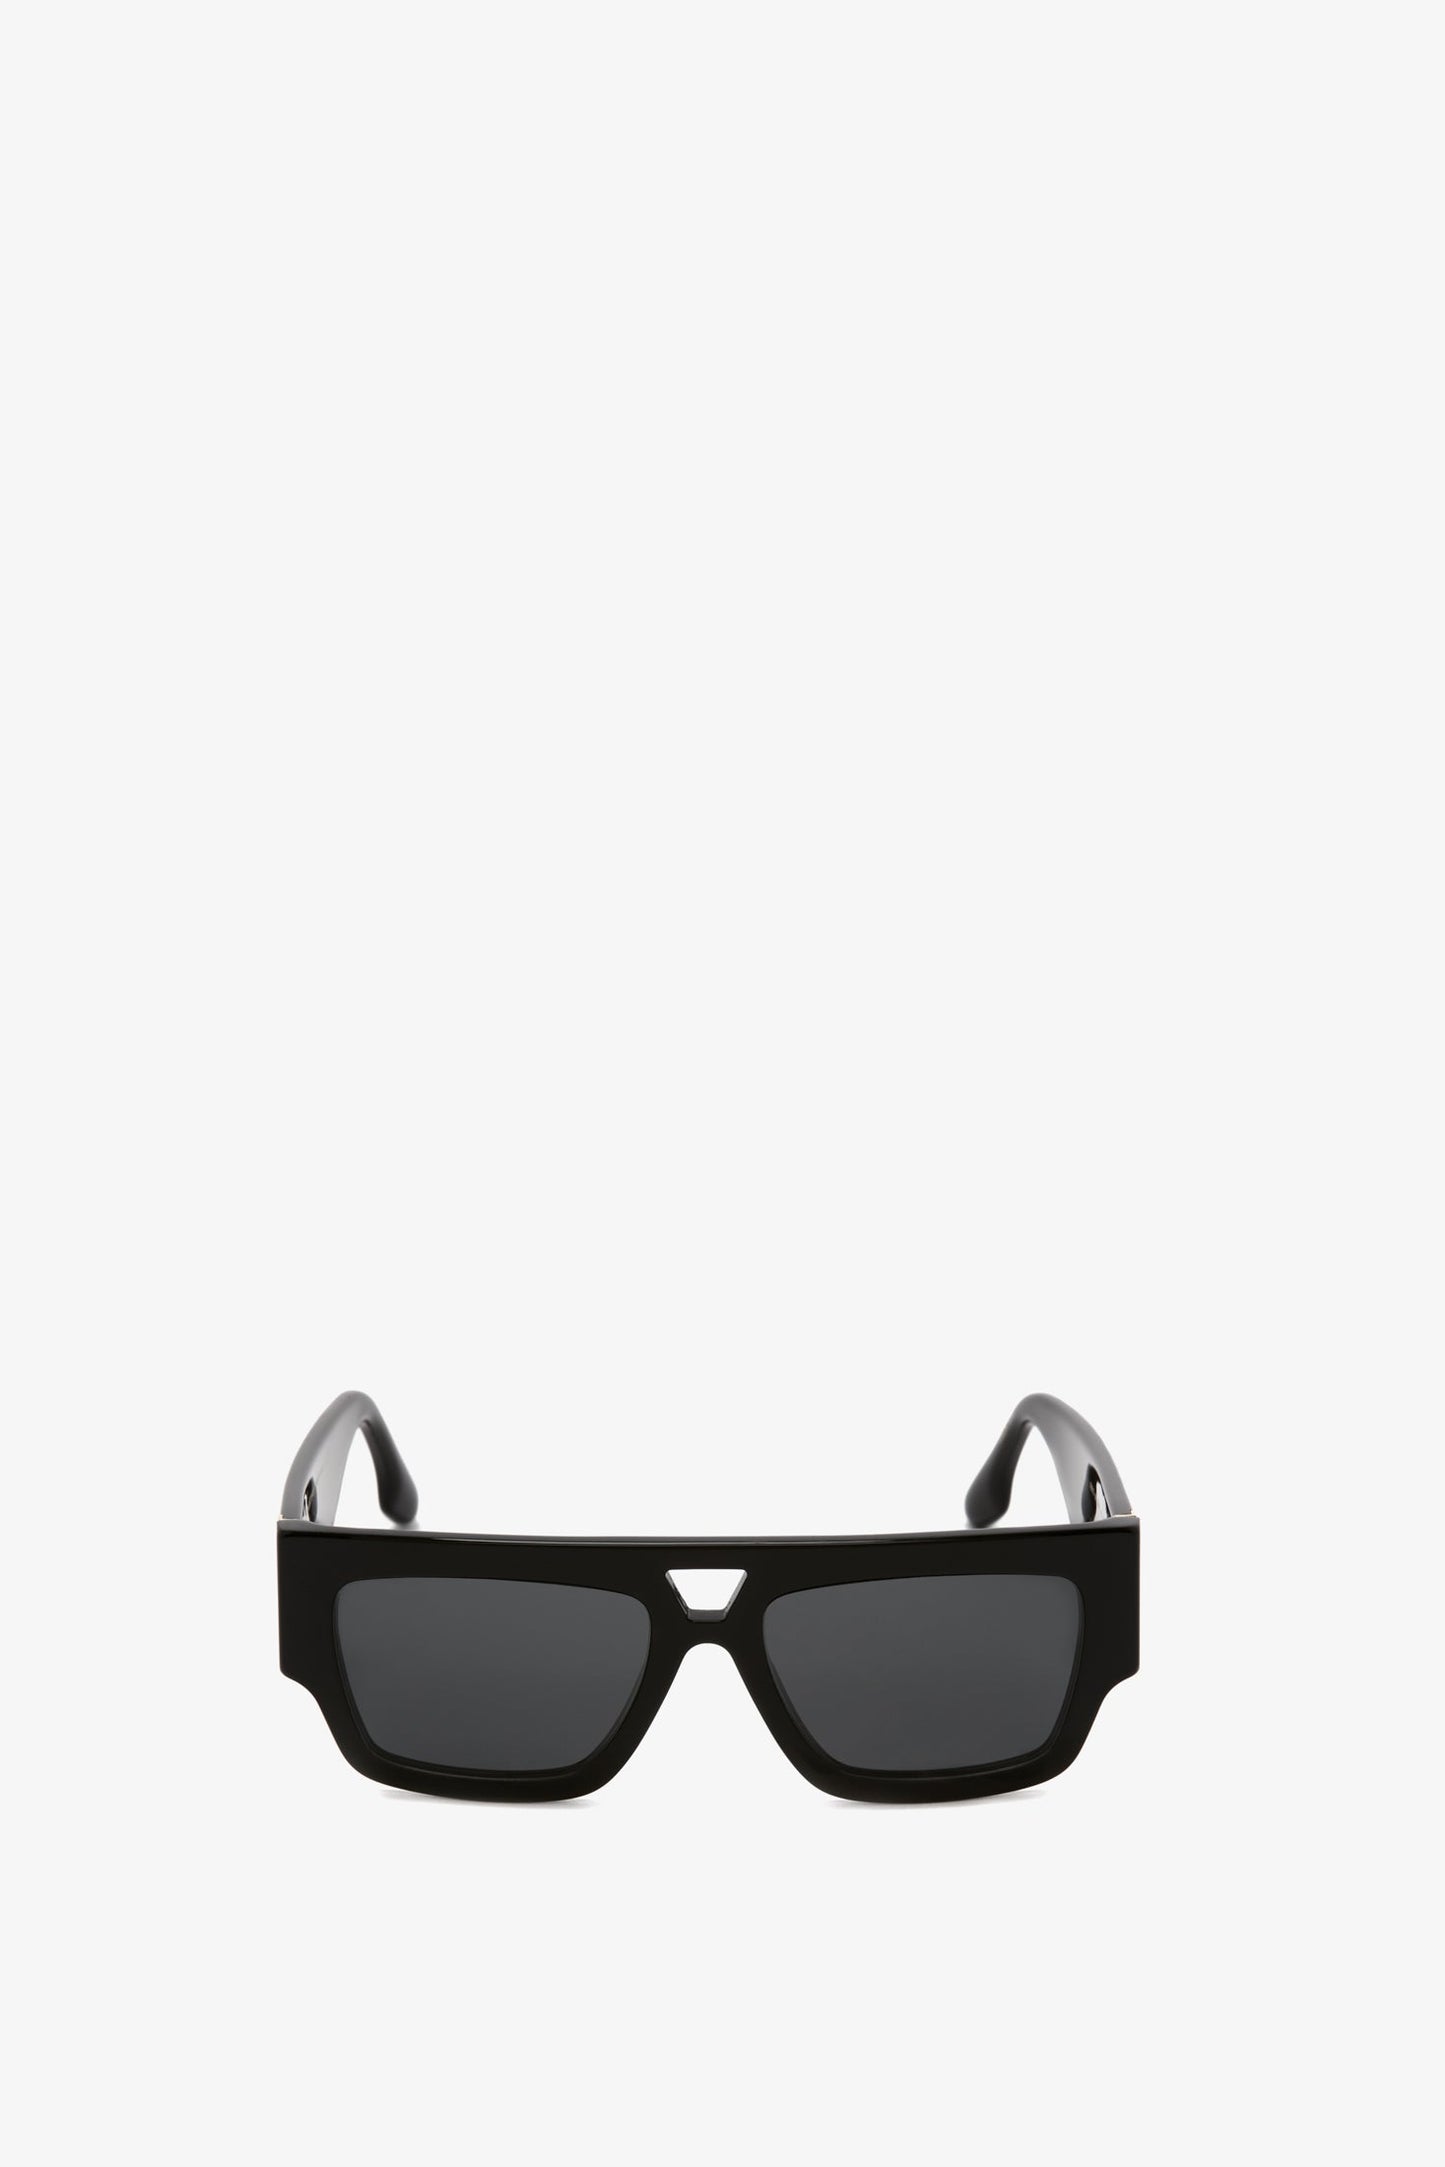 Louis Vuitton Men's Sunglasses for sale in London, United Kingdom